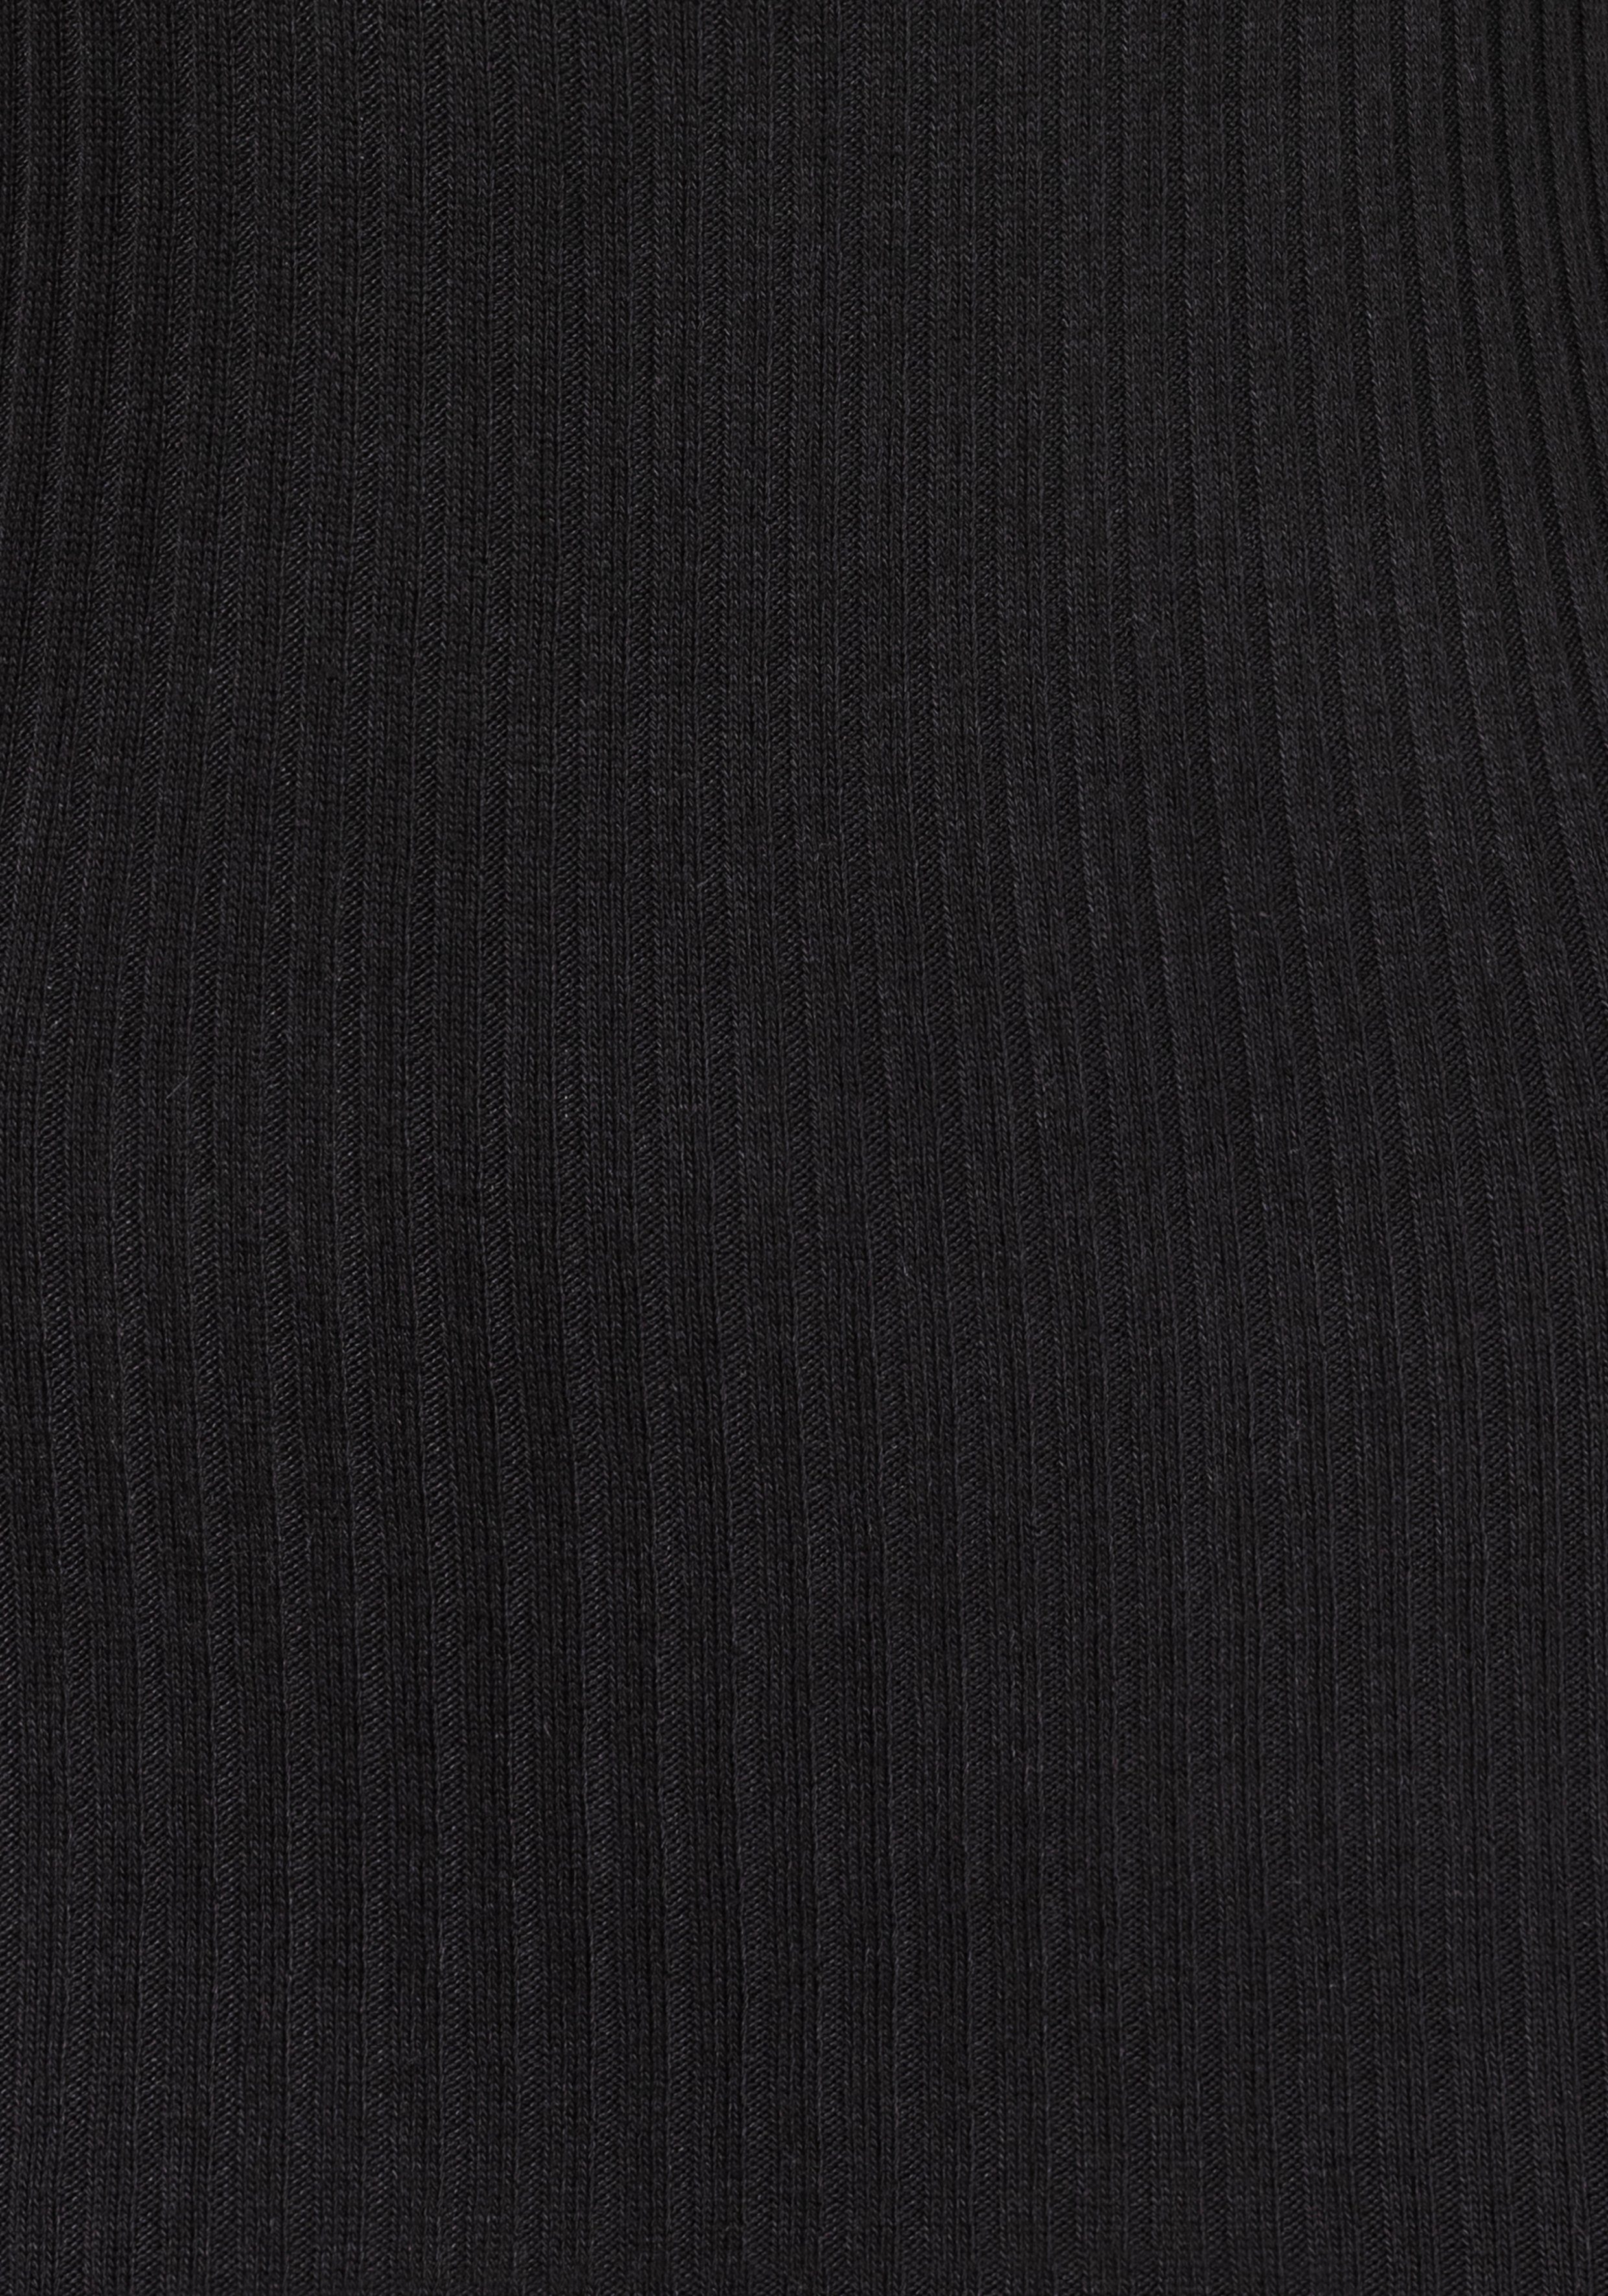 T-Shirt Ripp-Qualität schwarz LASCANA modischer aus